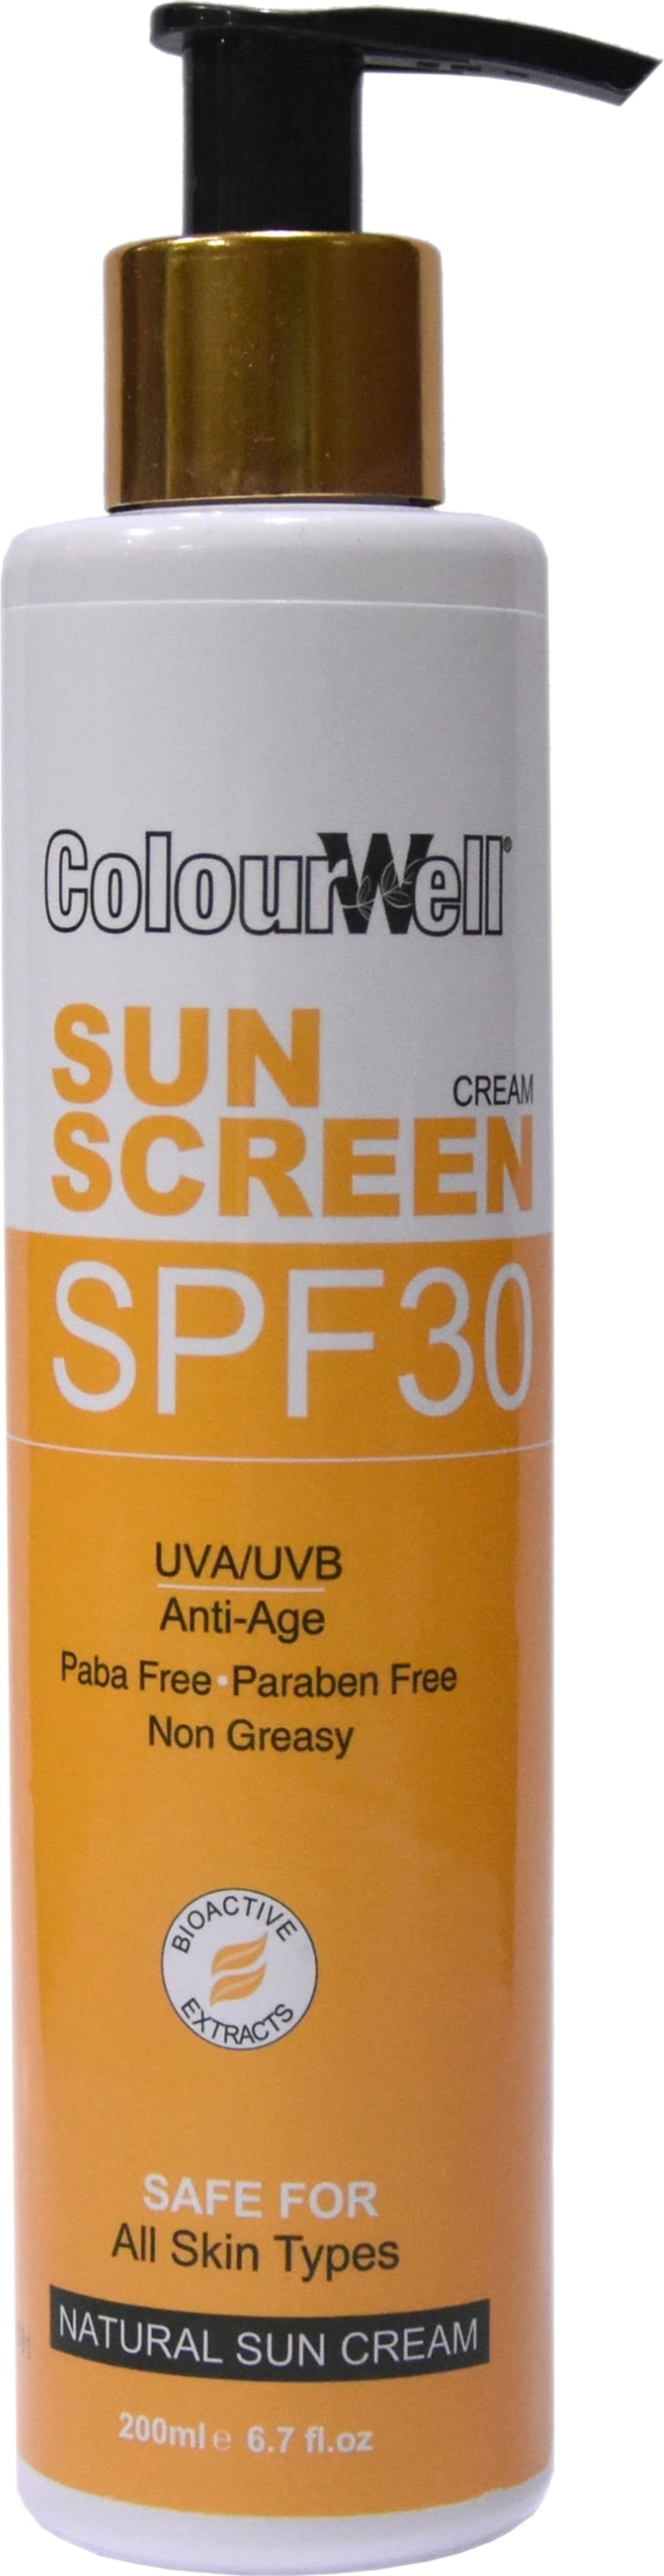 ColourWell Crema Solar FPS 30 - 200 ml